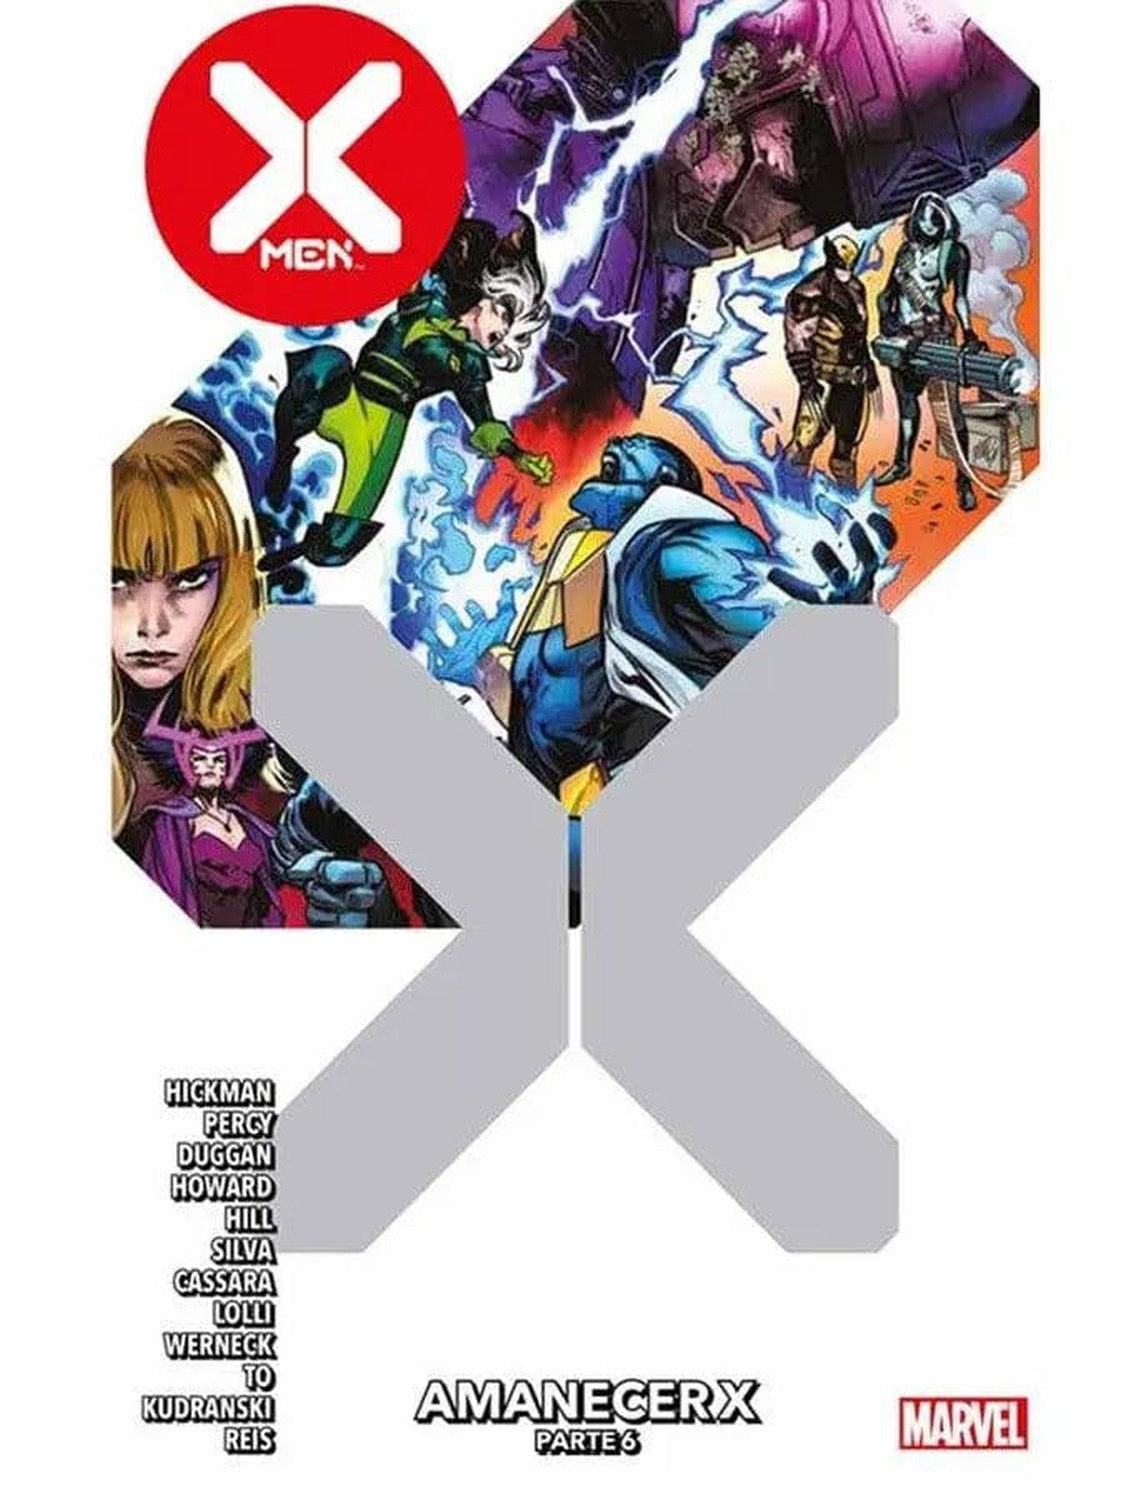 X-Men Vol. 10 Amanecer X Parte 6